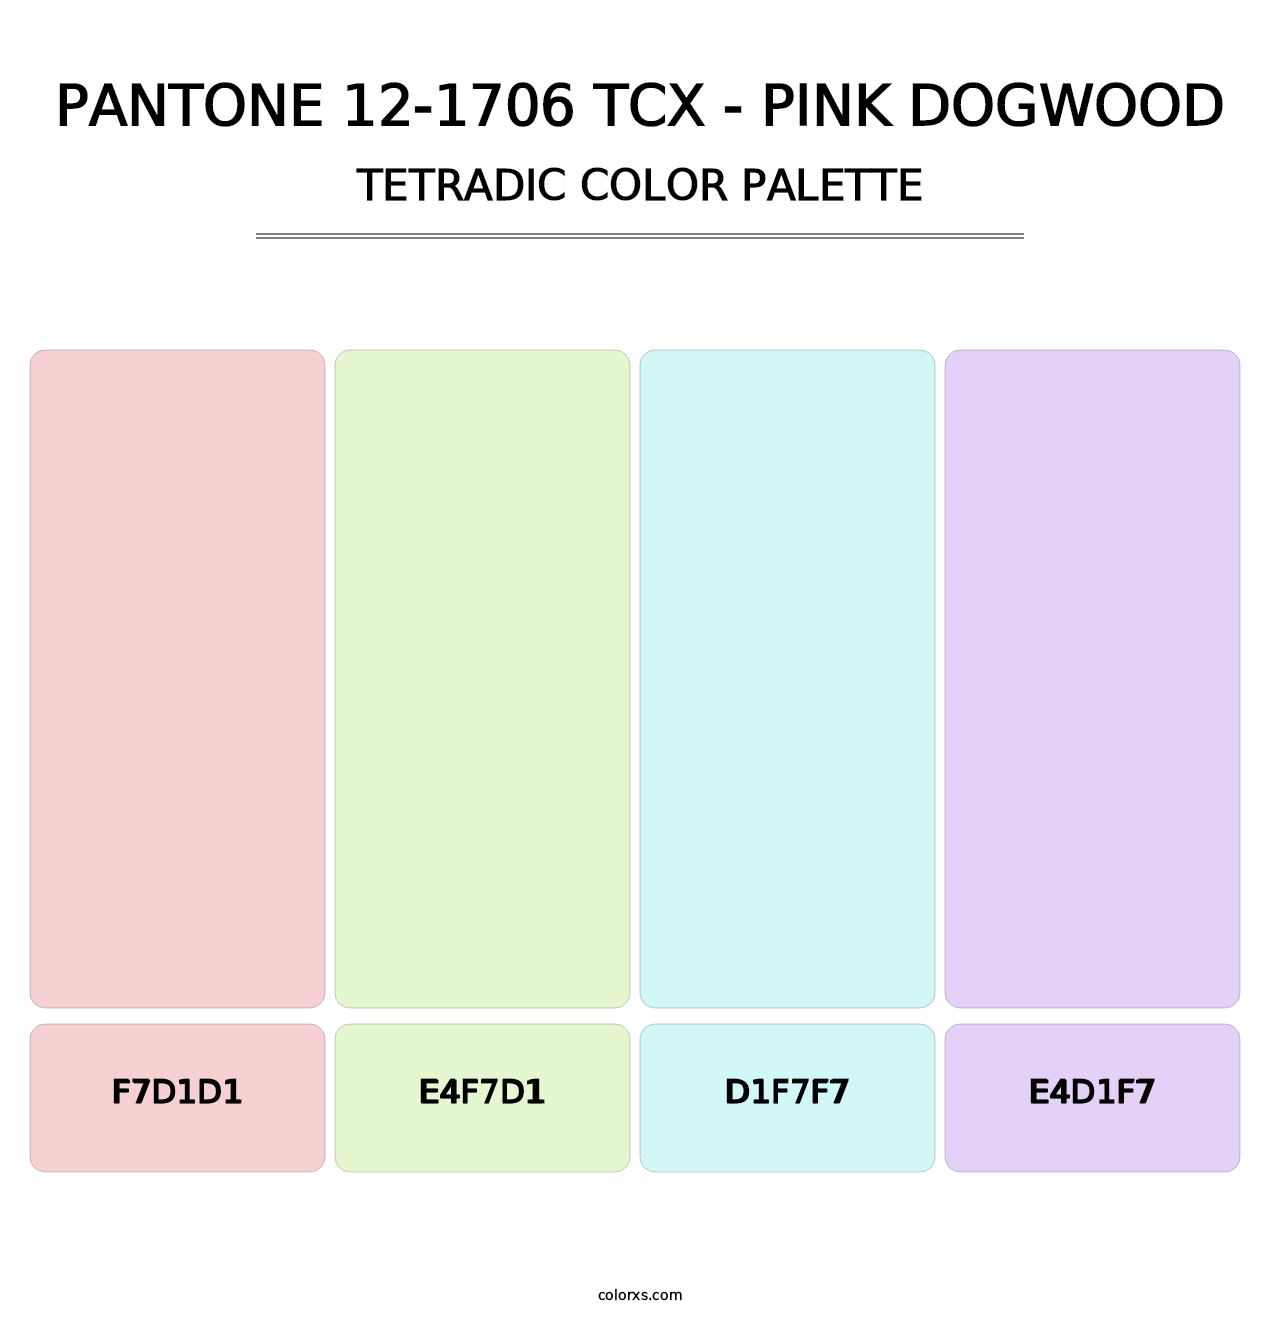 PANTONE 12-1706 TCX - Pink Dogwood - Tetradic Color Palette